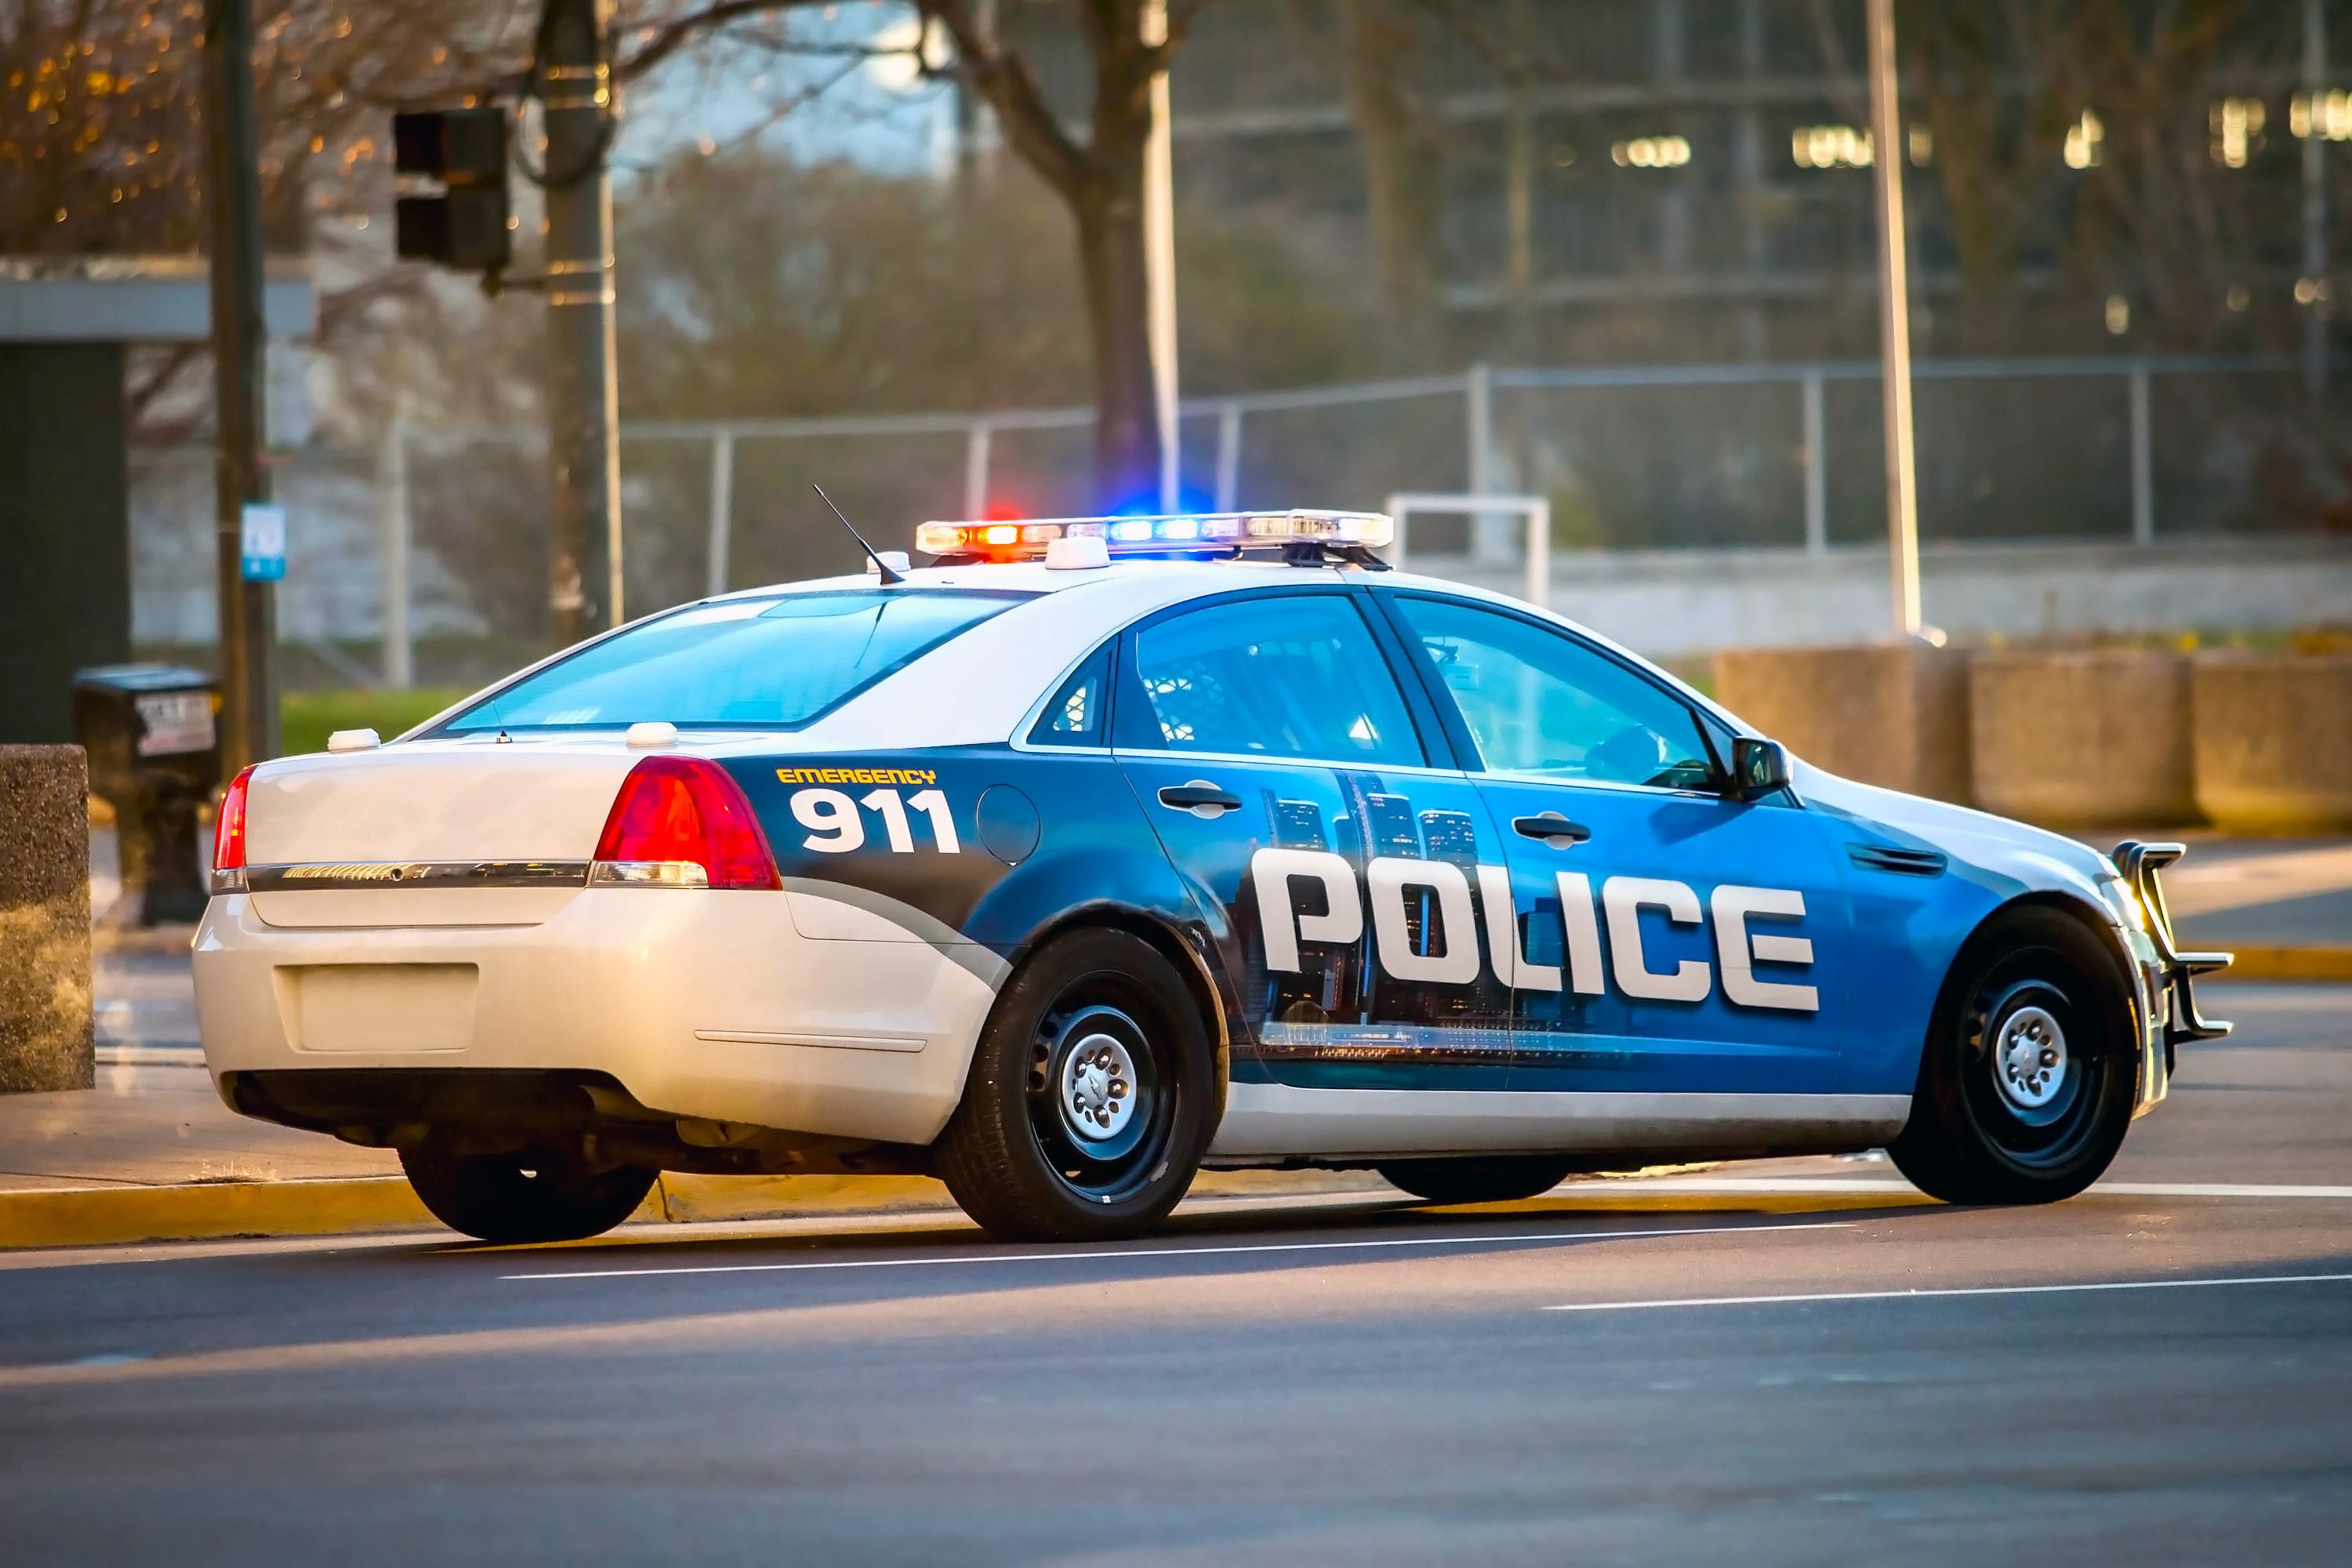 Une patrouille de police descendant une rue. | Source : Shutterstock